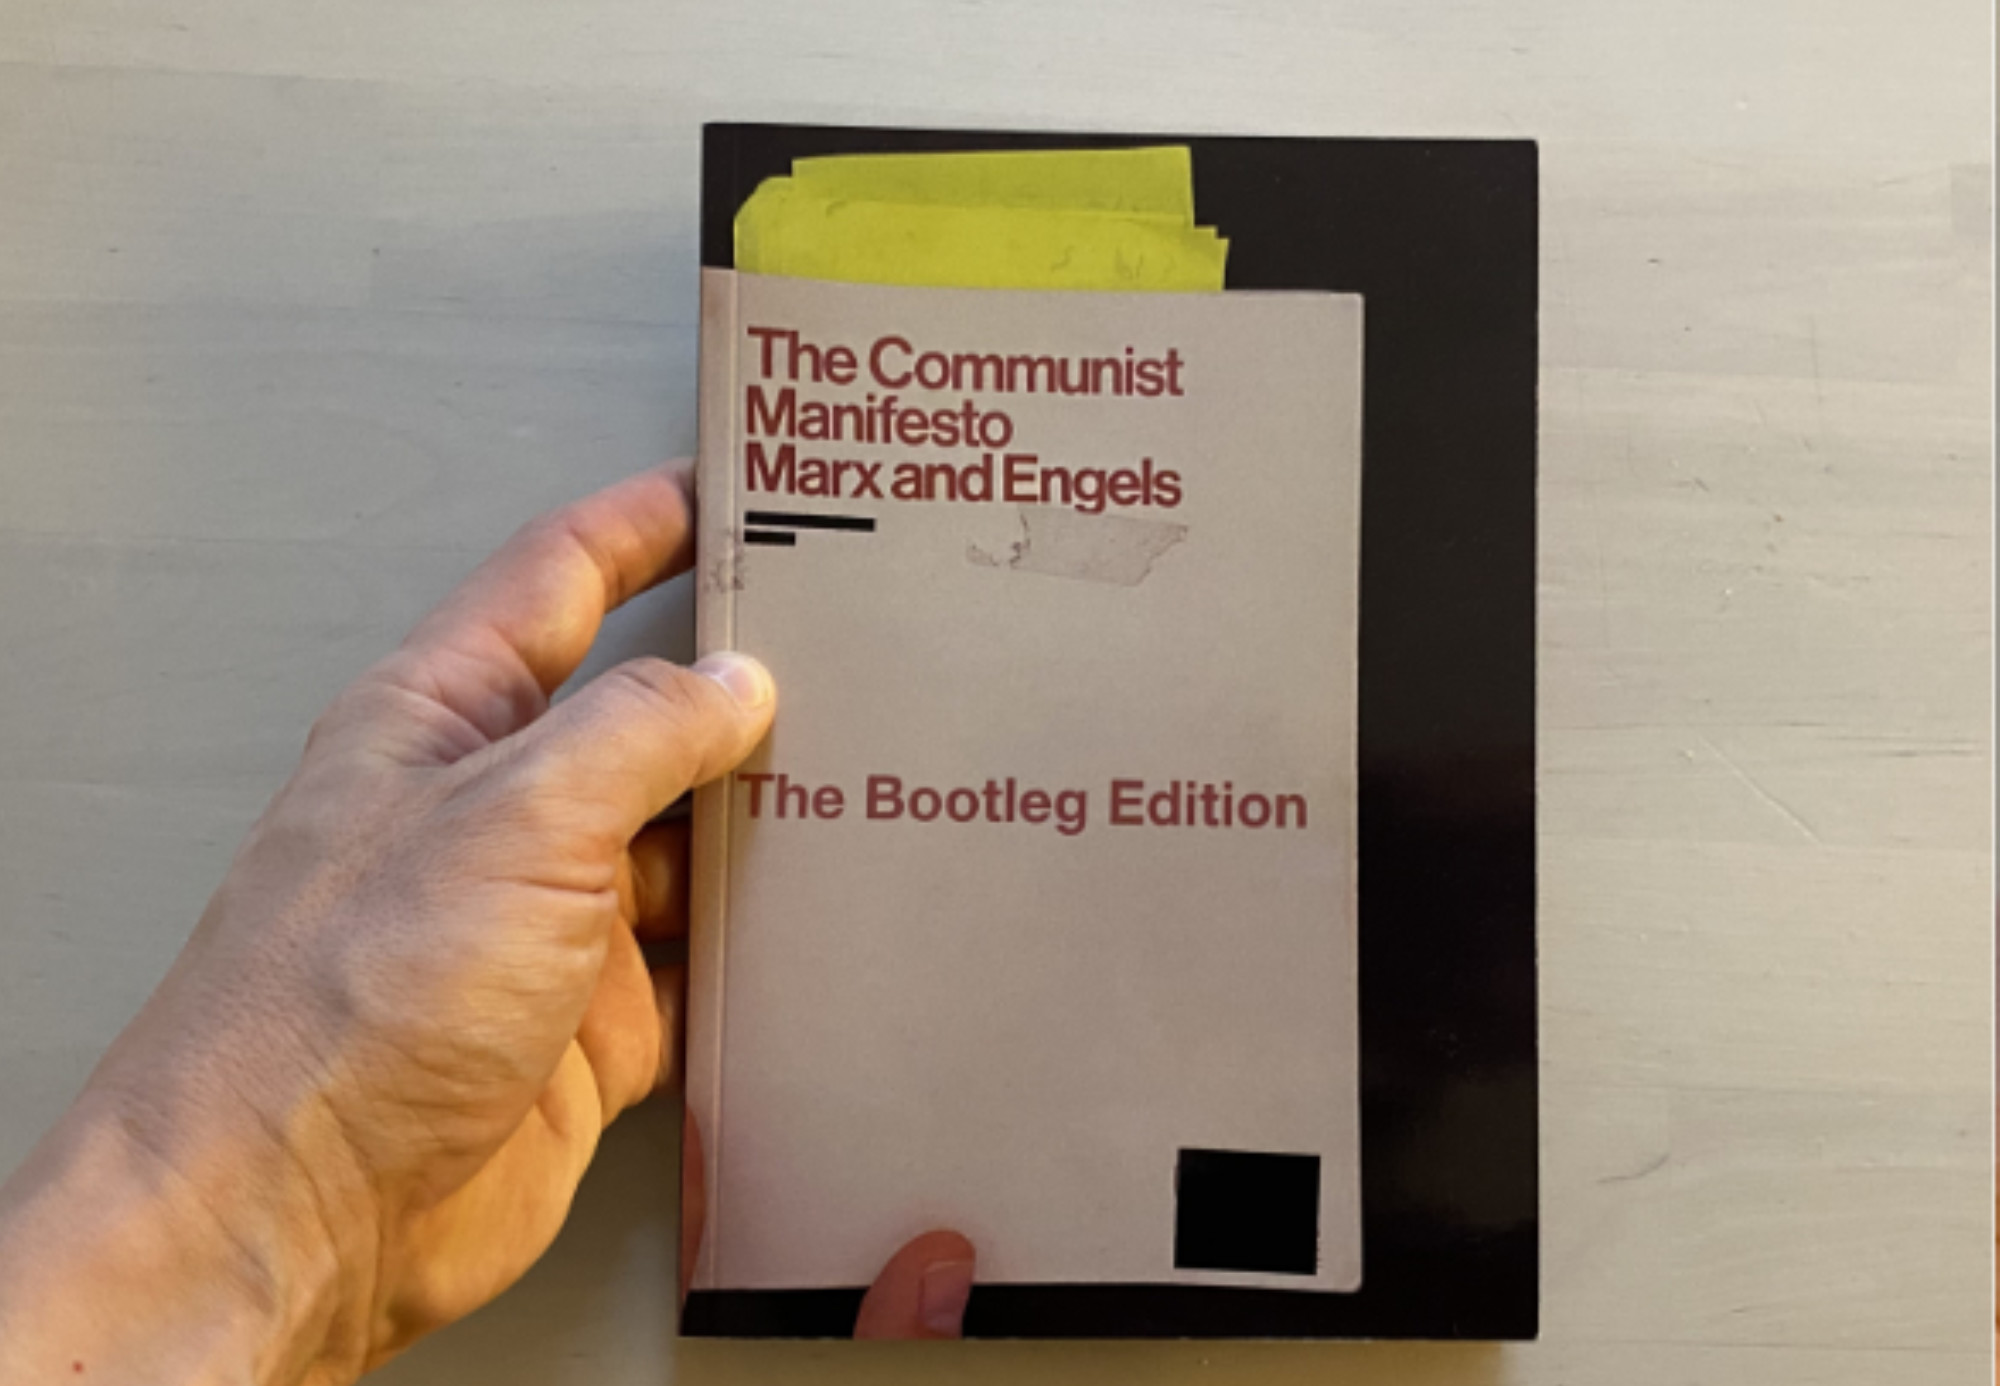 inside book The Communist Manifesto